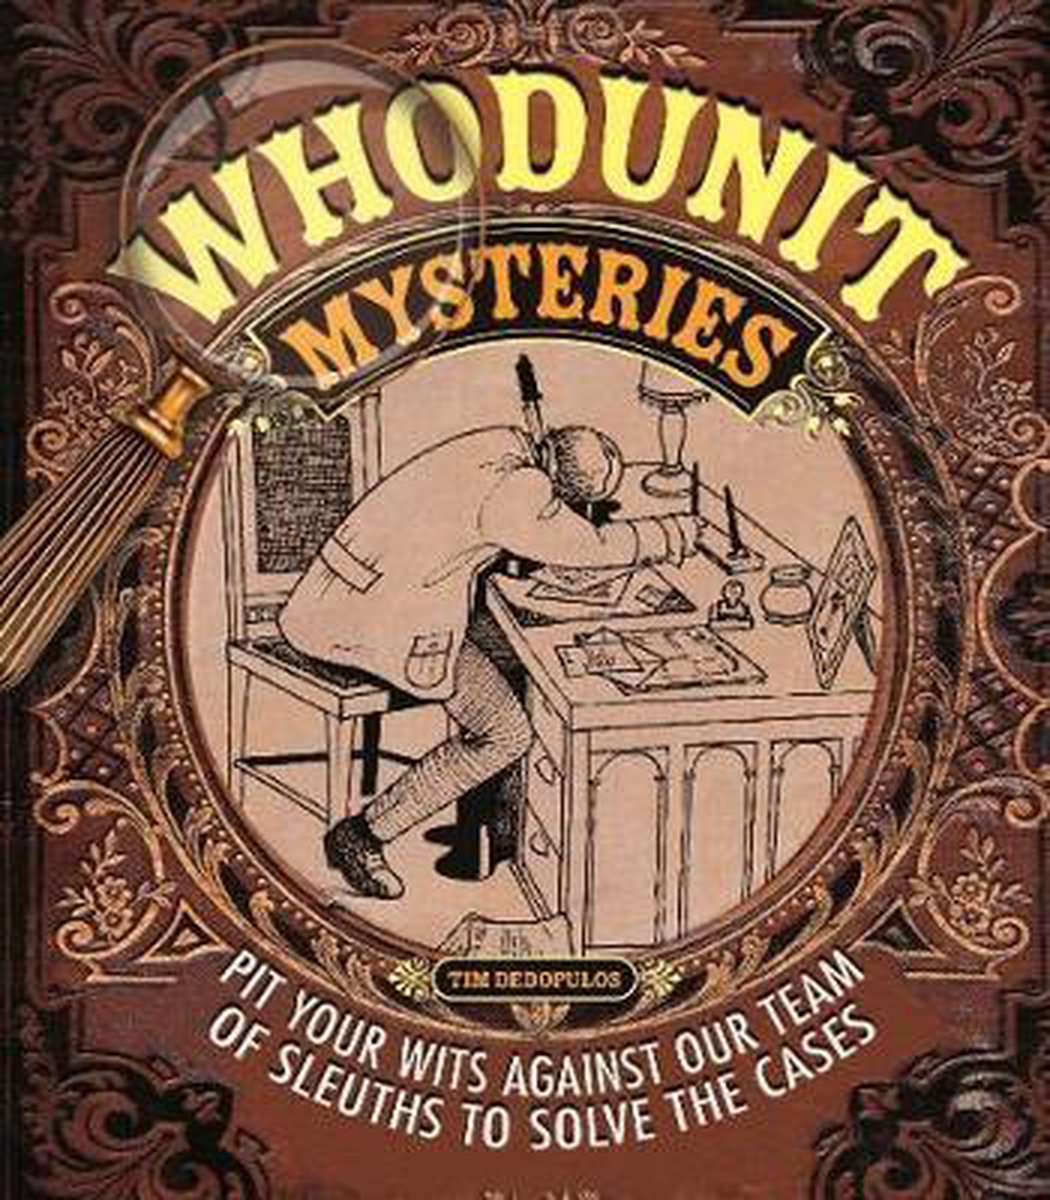 Whodunit Mysteries - Tim Dedopulos